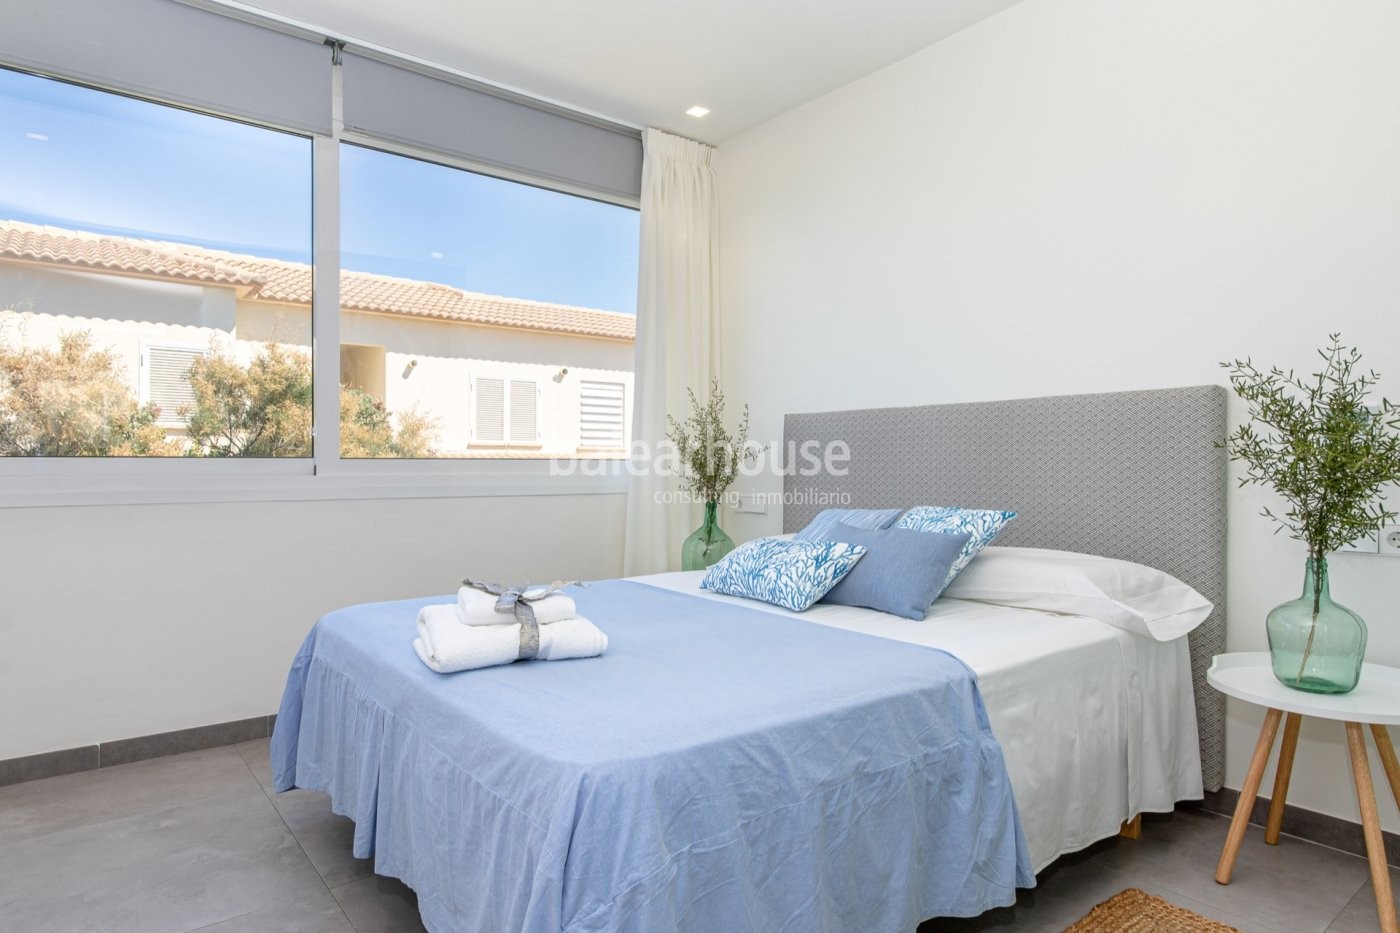 Excellent duplex penthouse with an unbeatable seafront location in Son Serra de Marina.